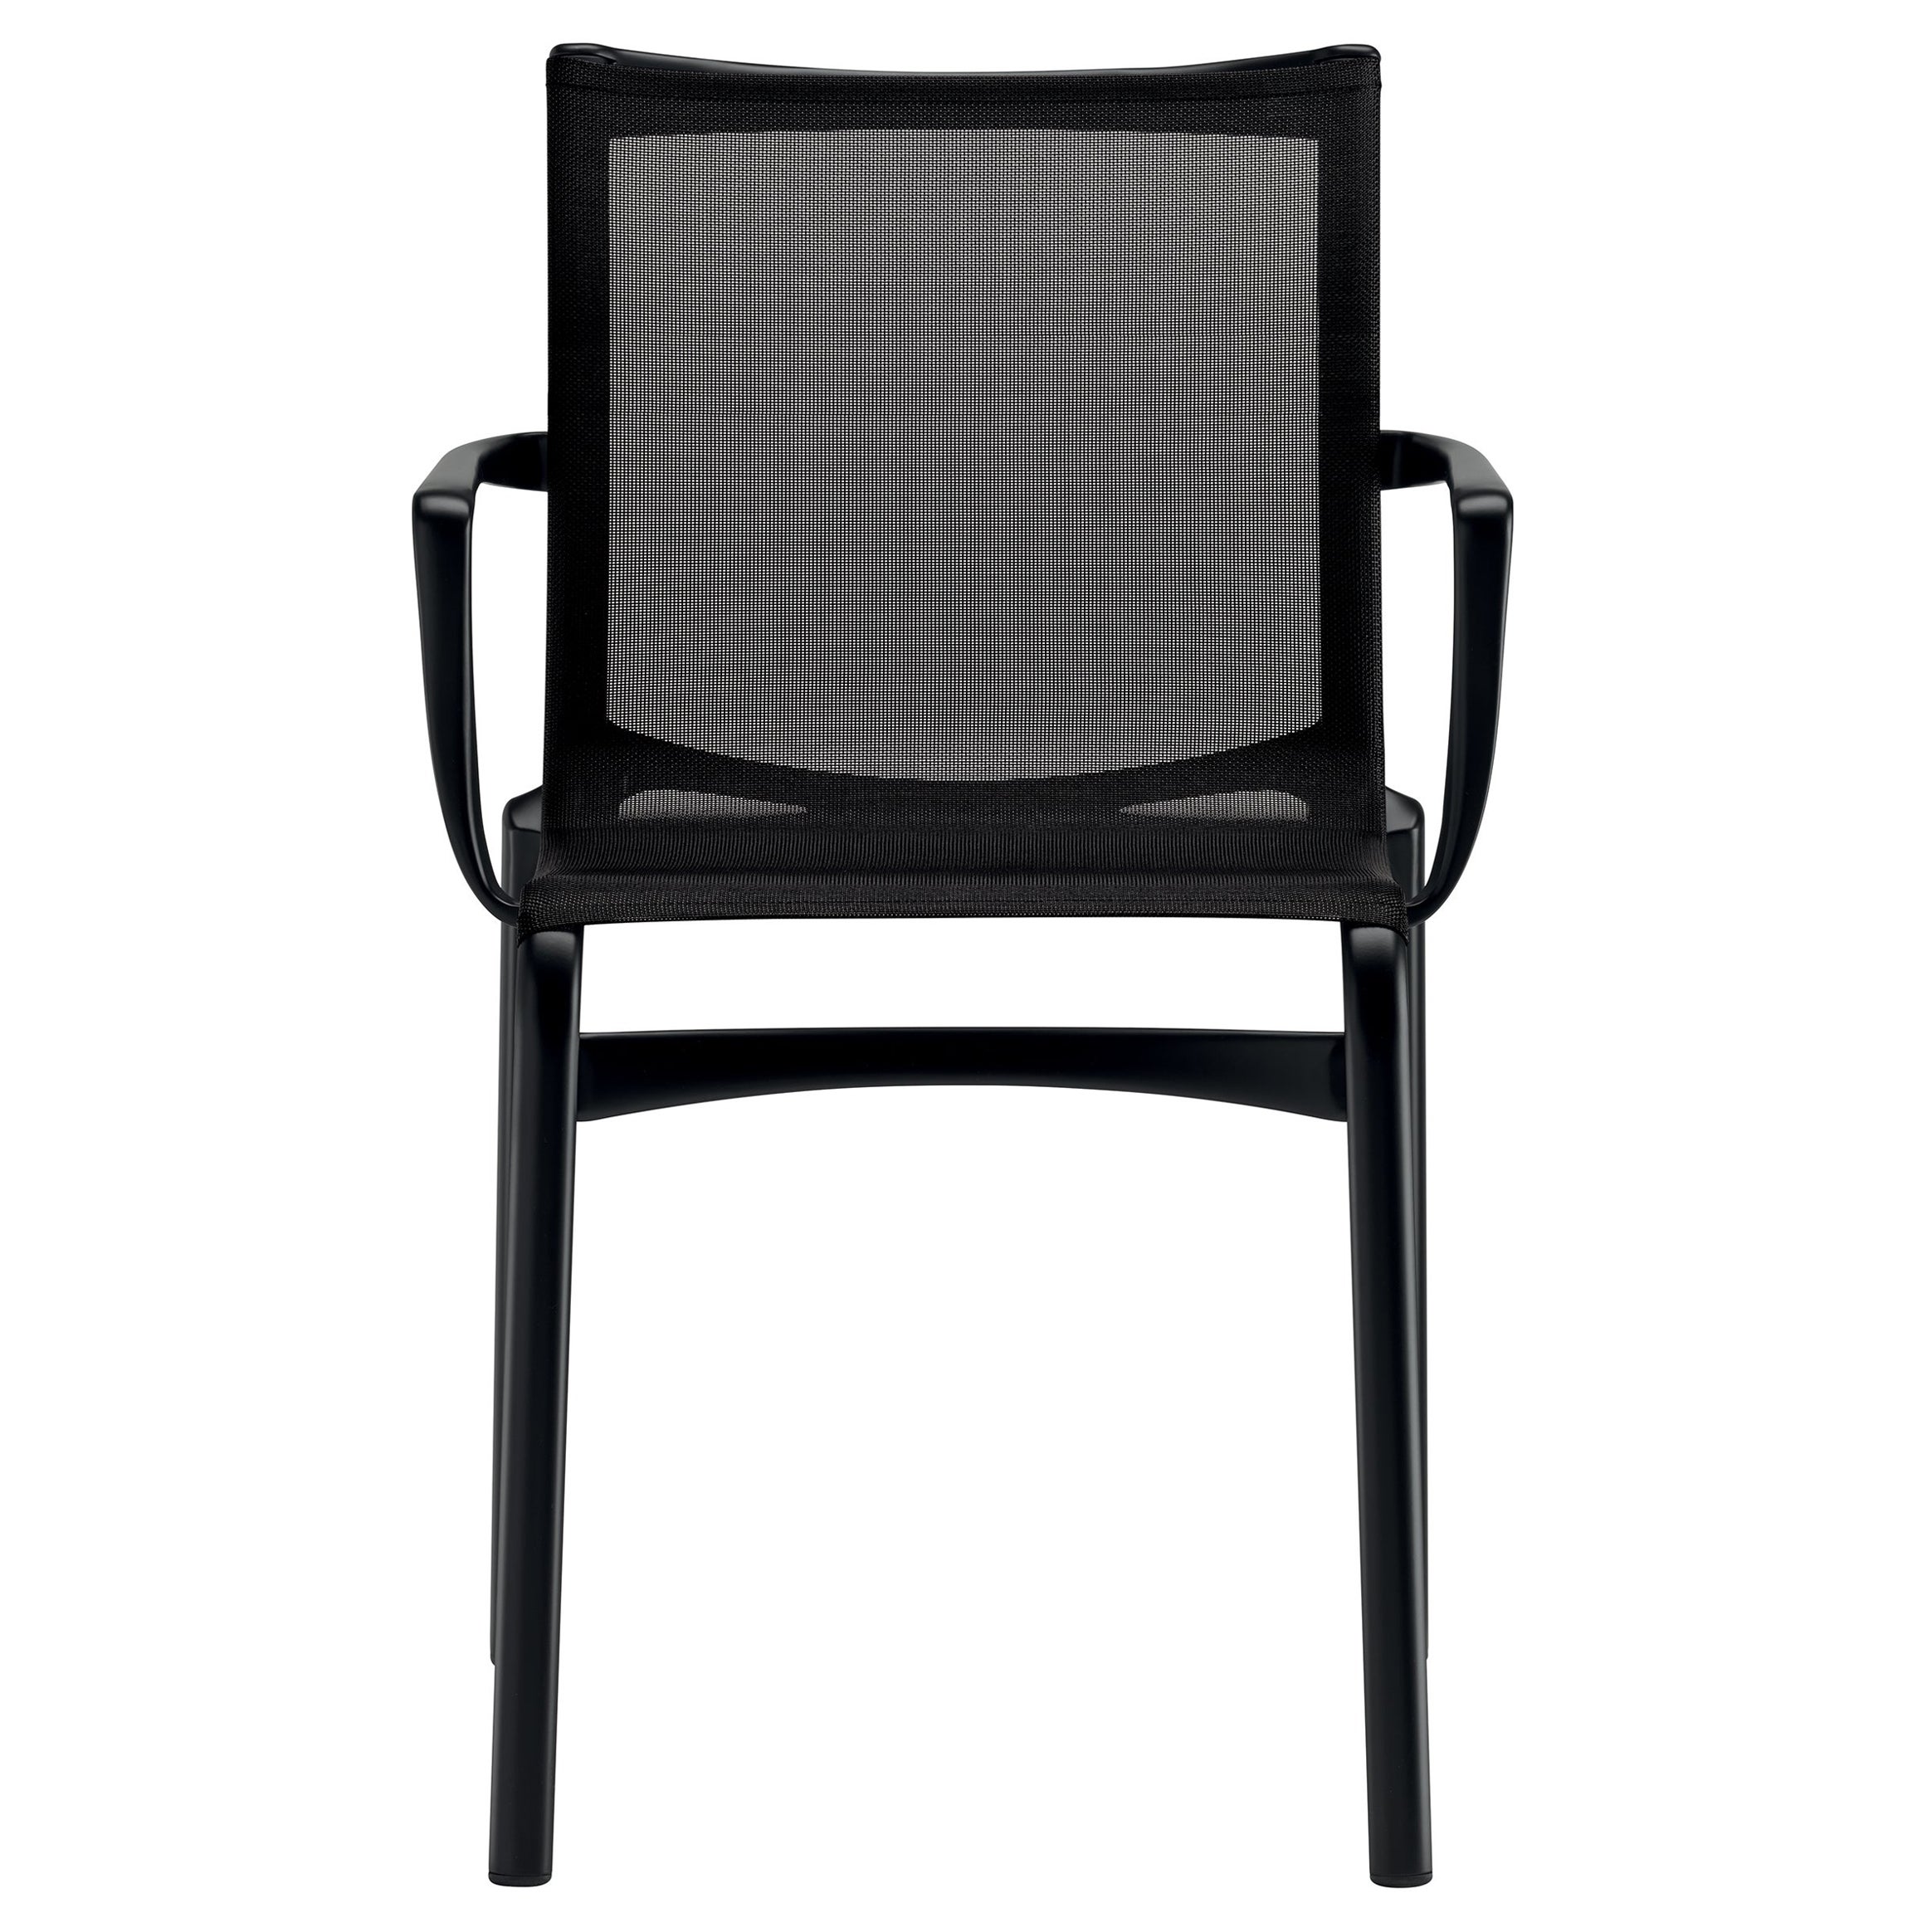 Alias Bigframe 44, Sessel aus schwarzem Netzgeflecht mit lackiertem Aluminiumrahmen im Angebot